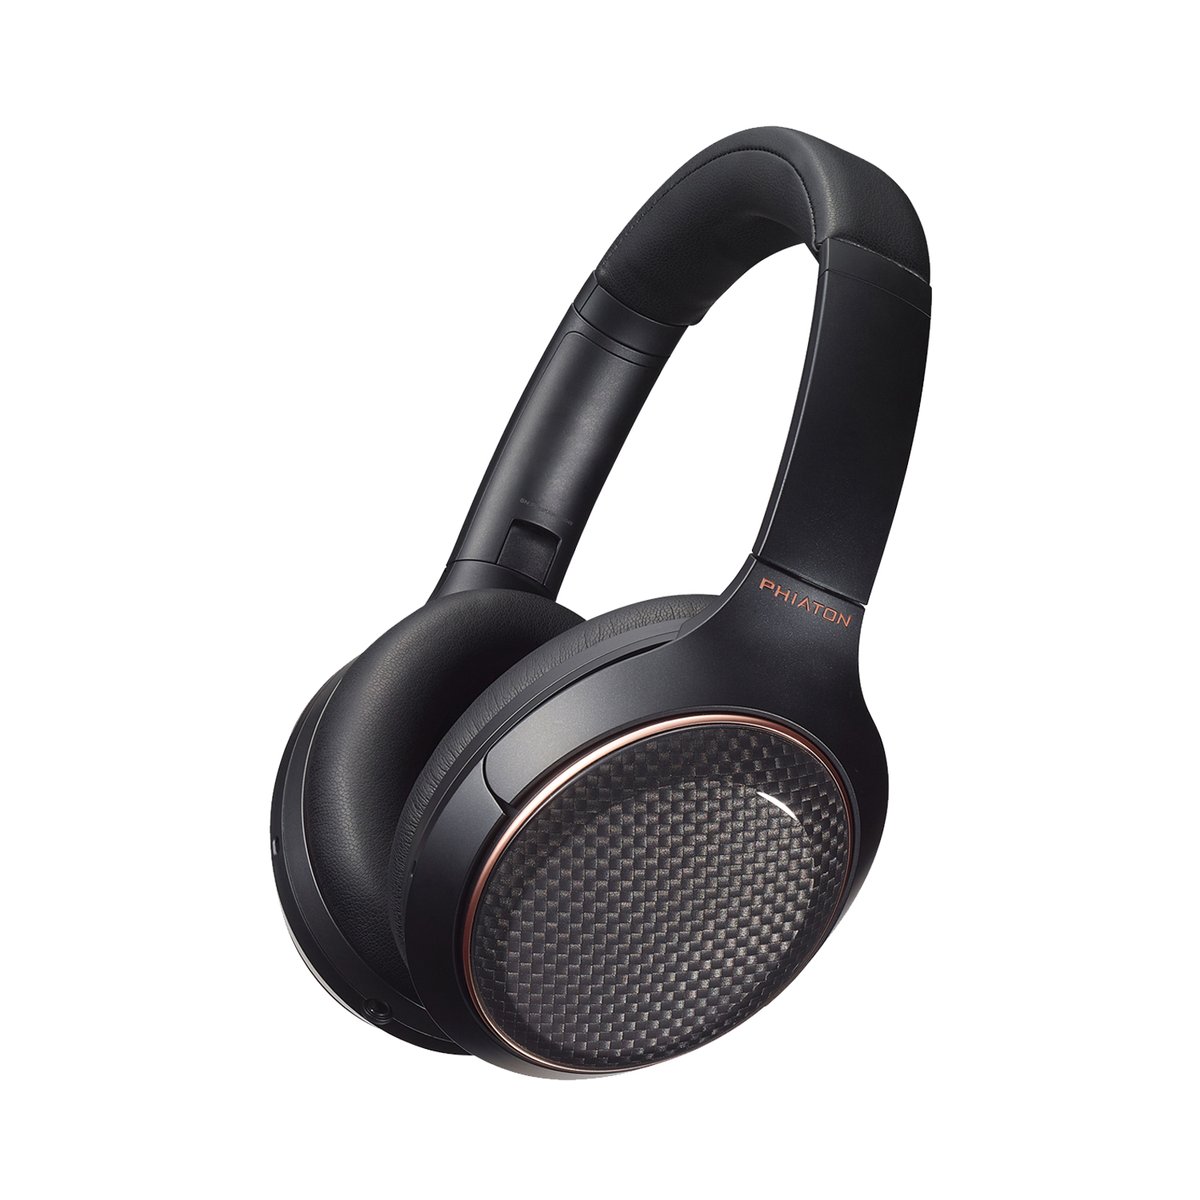 Phiaton 900 Legacy Bluetooth Noise cancellation headphones $191.25